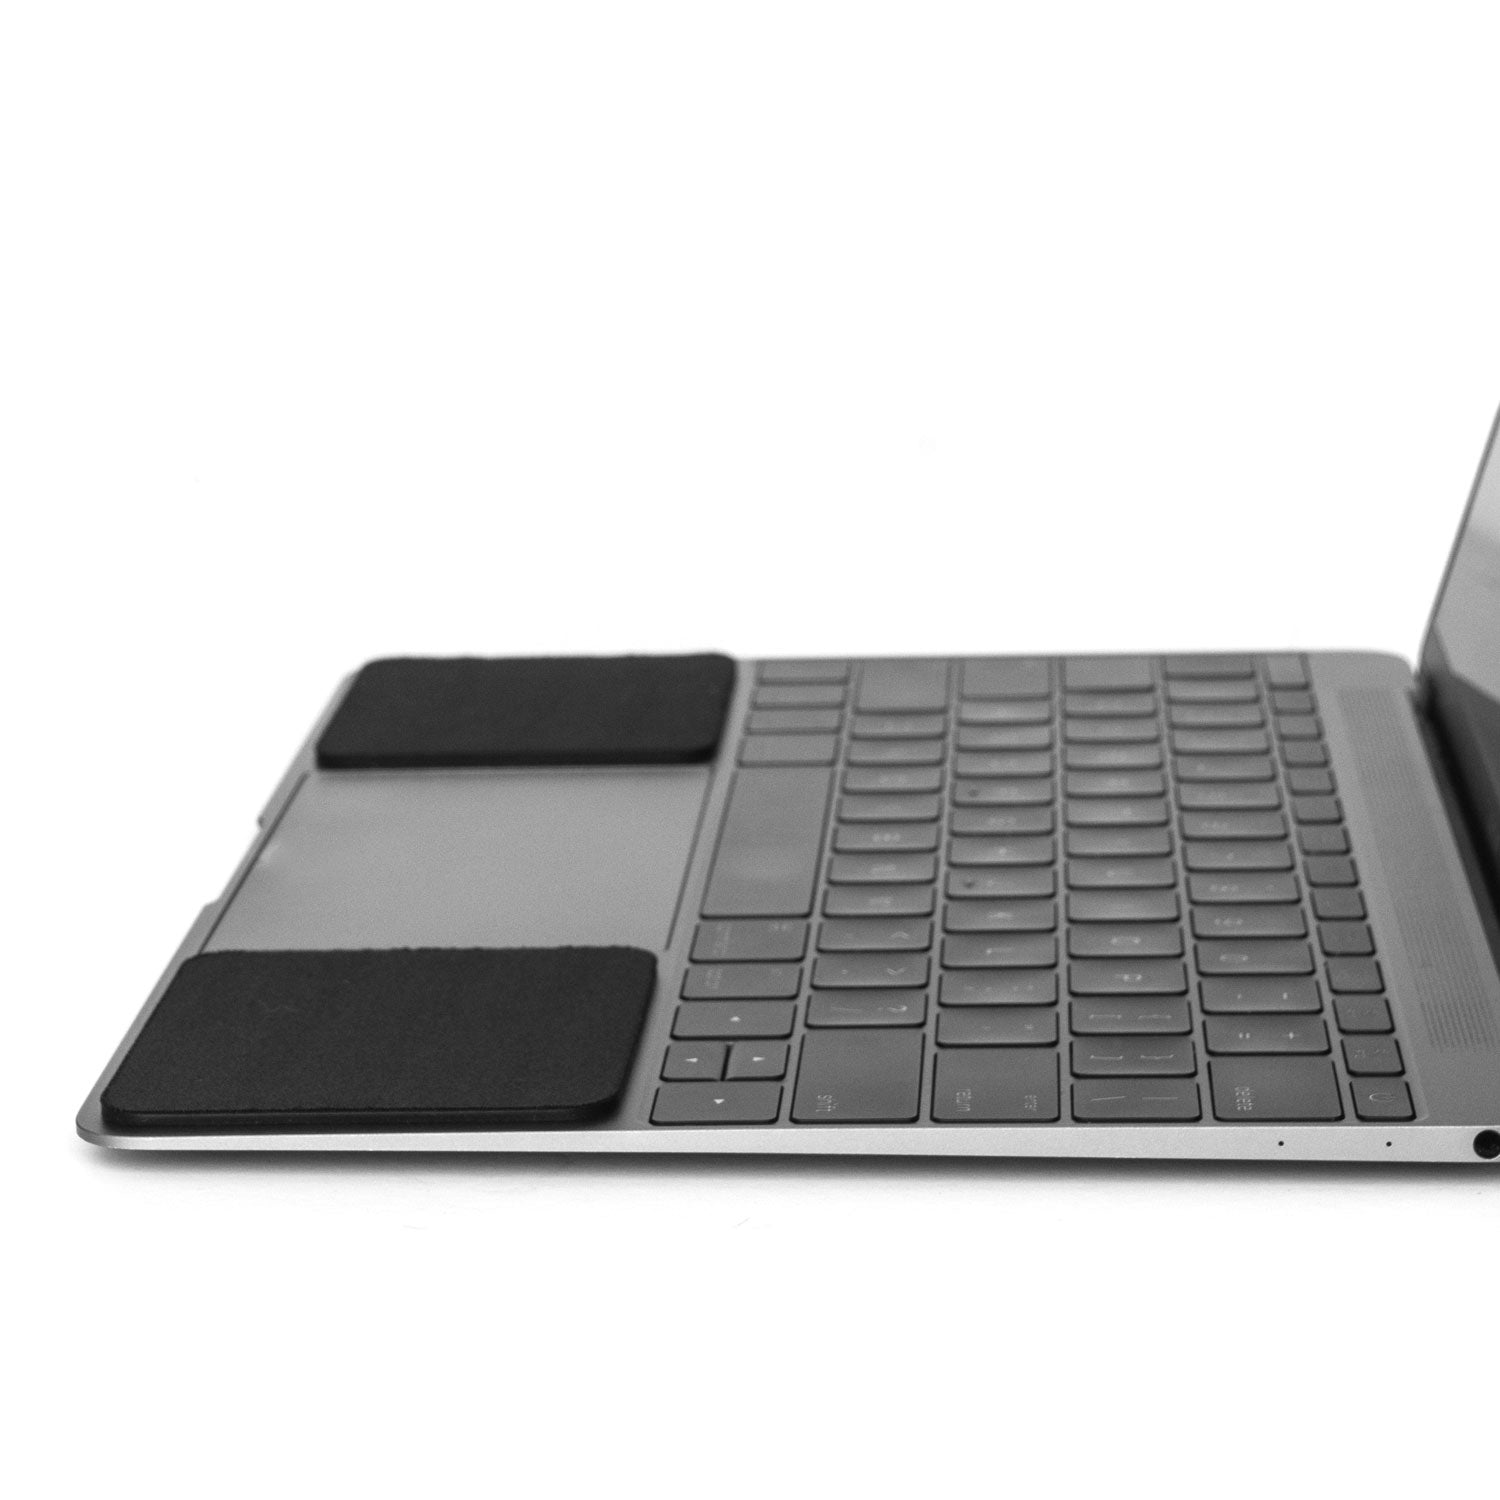 Grifiti Small Slim Palm Pads 2.75 x 3 x 0.18 inch Small Wrist Rest on MacBooks and Laptops - Grifiti